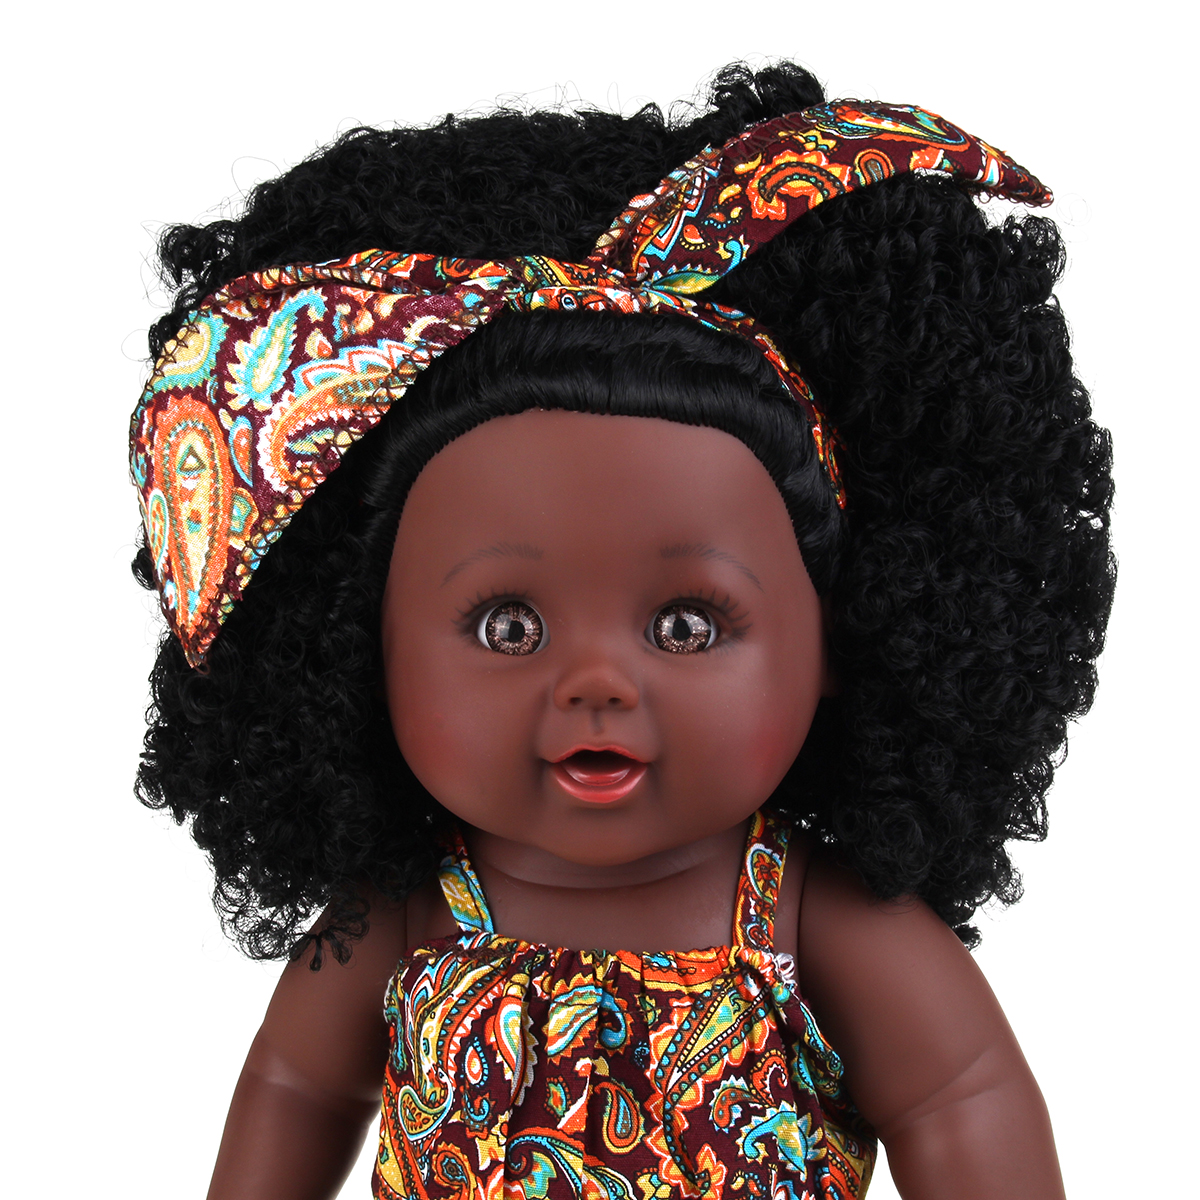 30CM-Silicone-Vinyl-African-Girl-Realistic-Reborn-Lifelike-Newborn-Baby-Doll-Toy-with-360deg-Moveabl-1817562-4